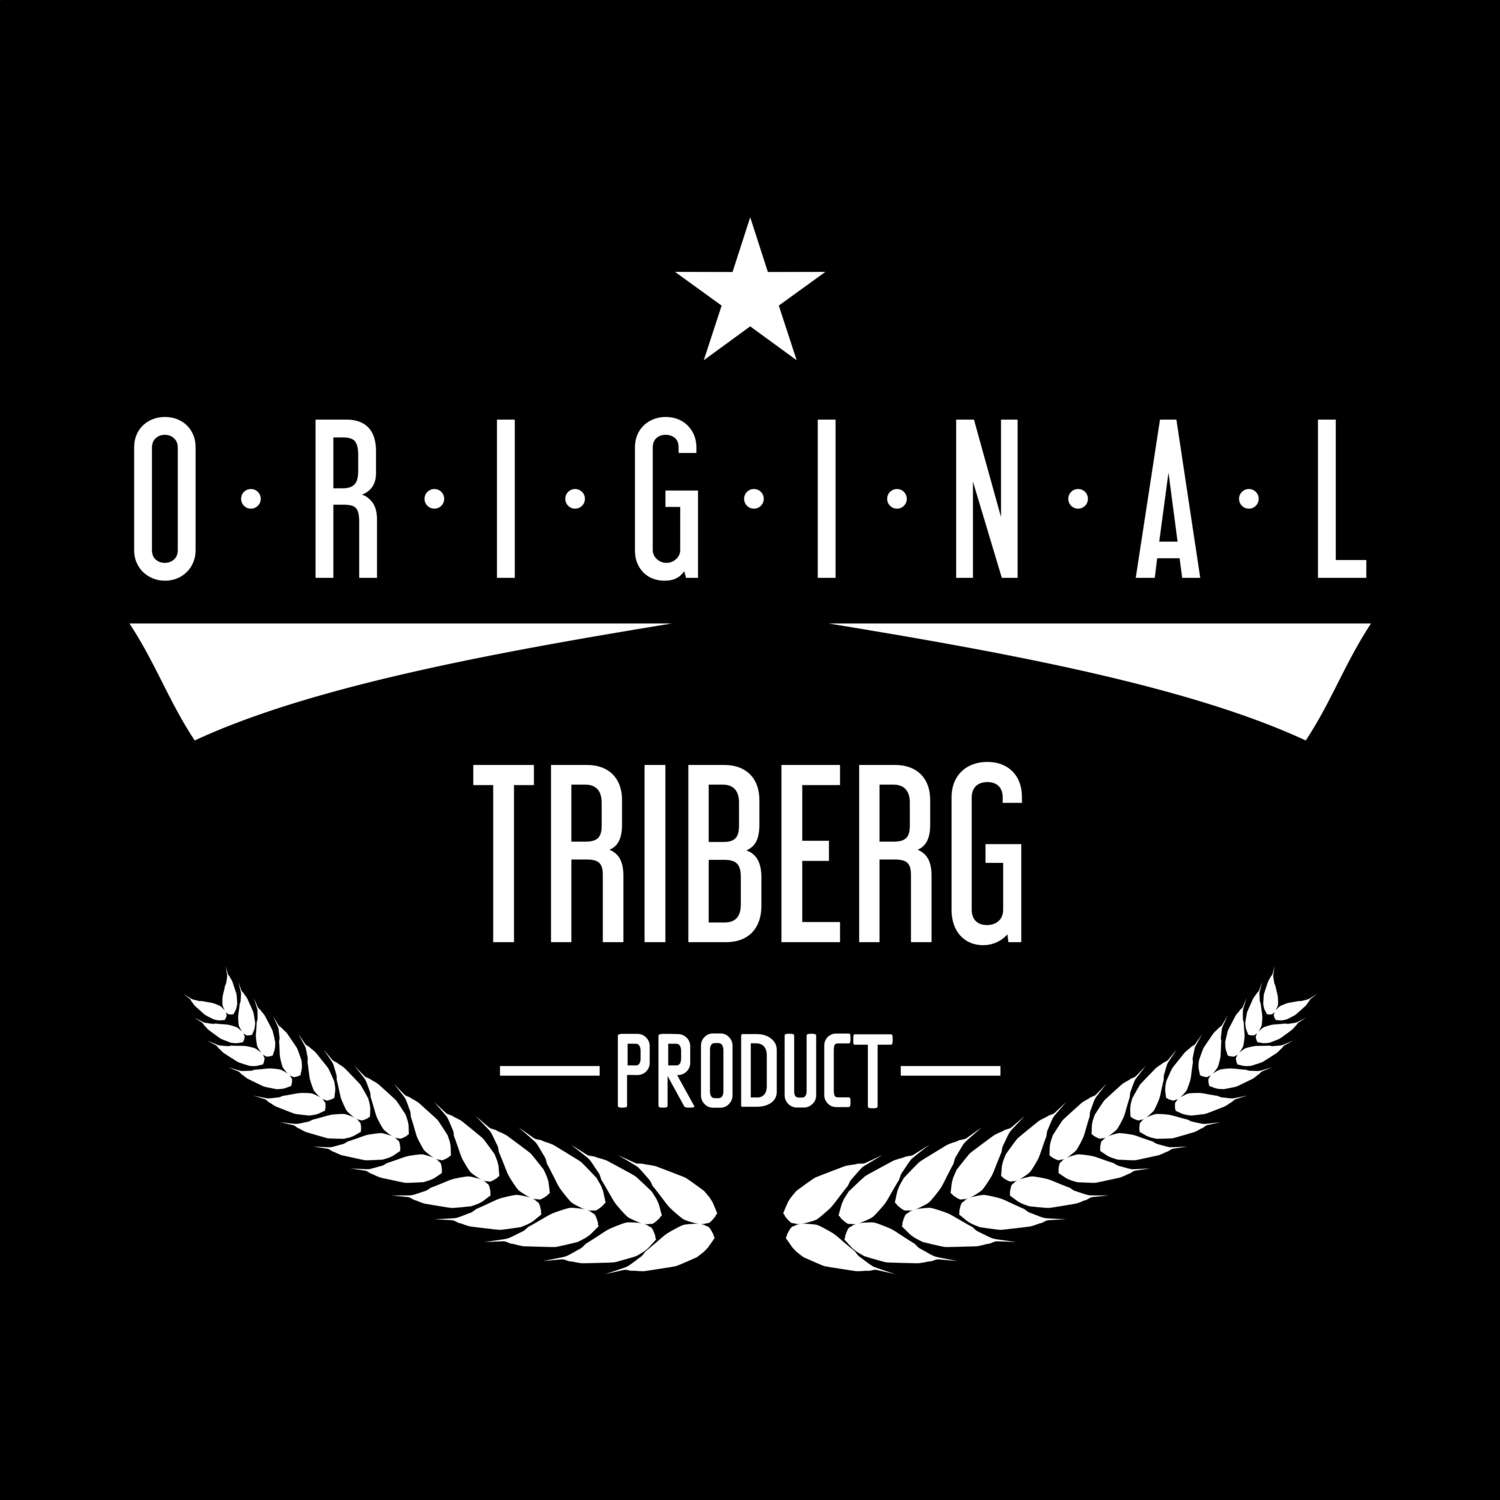 Triberg T-Shirt »Original Product«